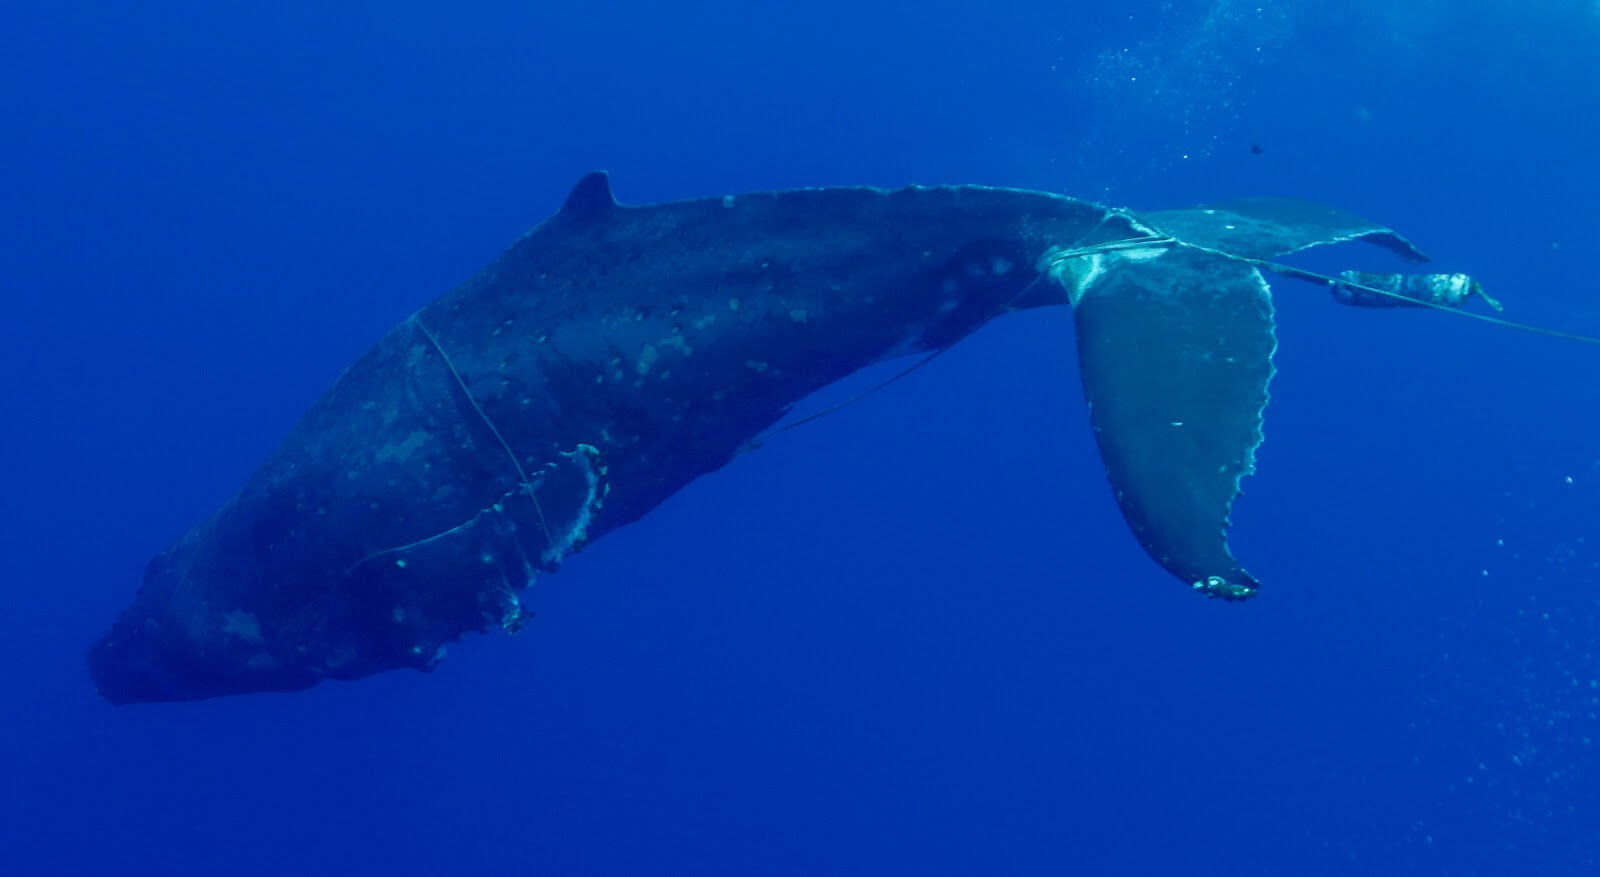 A whale entangled in marine debris